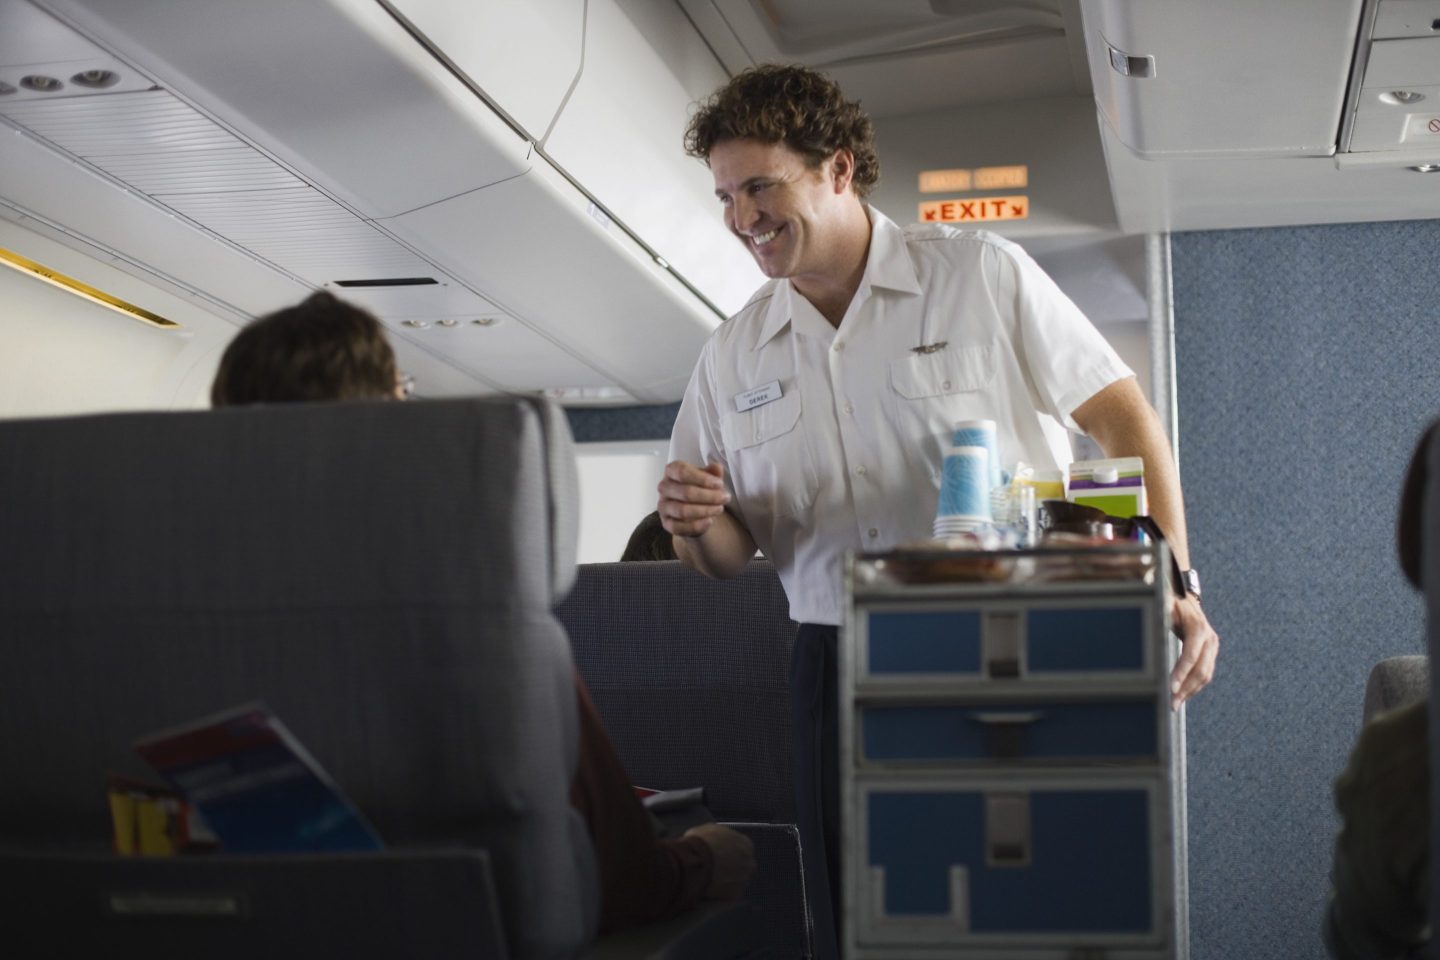 Southwest has about 20,000 flight attendants.